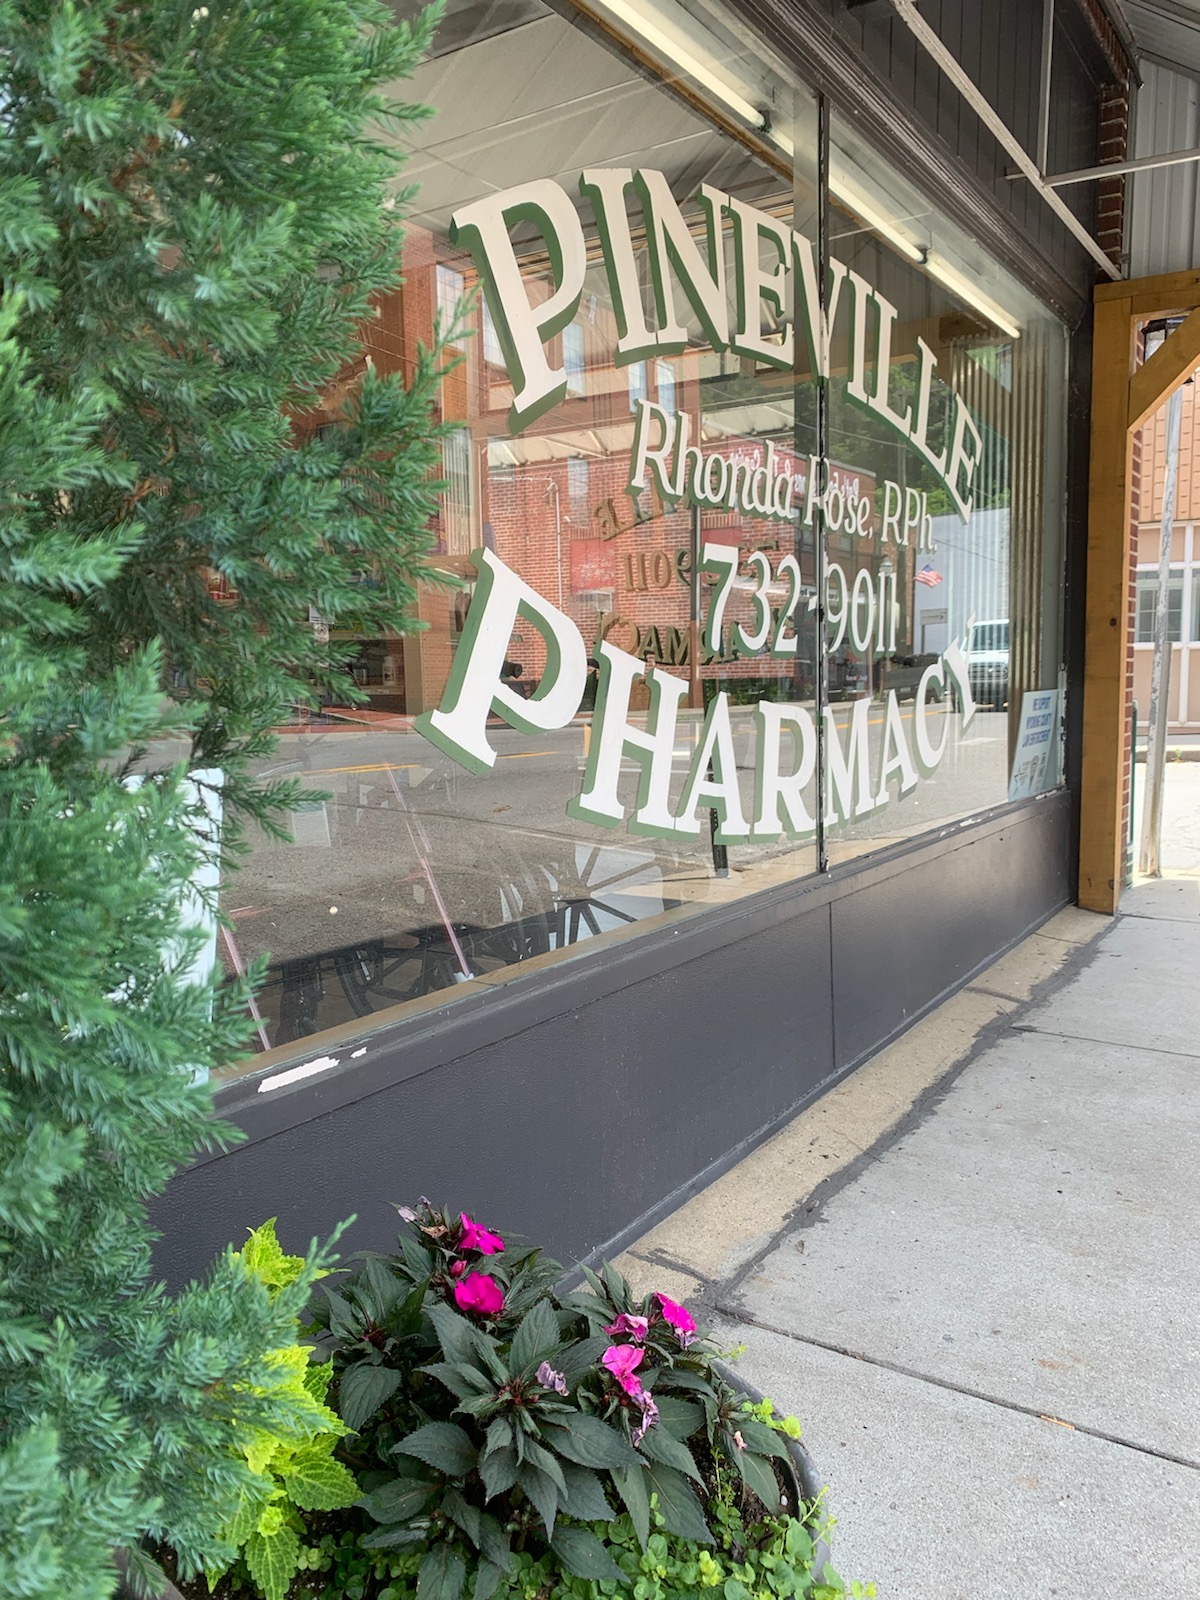 Rhonda's Pineville Pharmacy